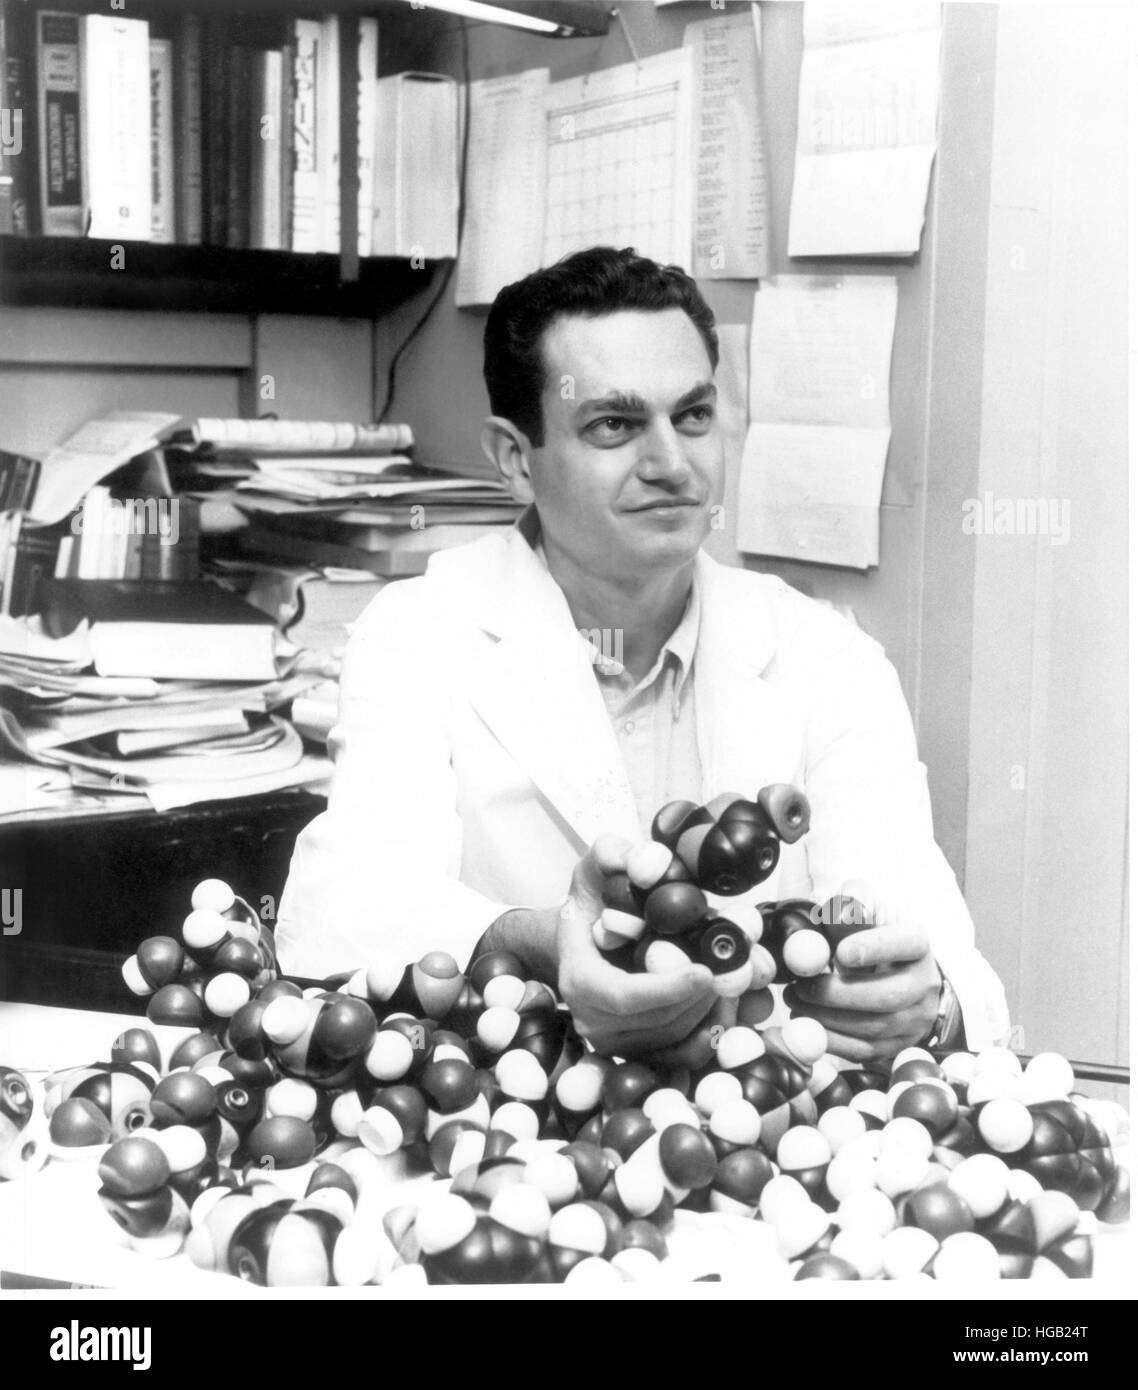 Le Dr Marshall Nirenberg holding modèles d'ADN. Banque D'Images